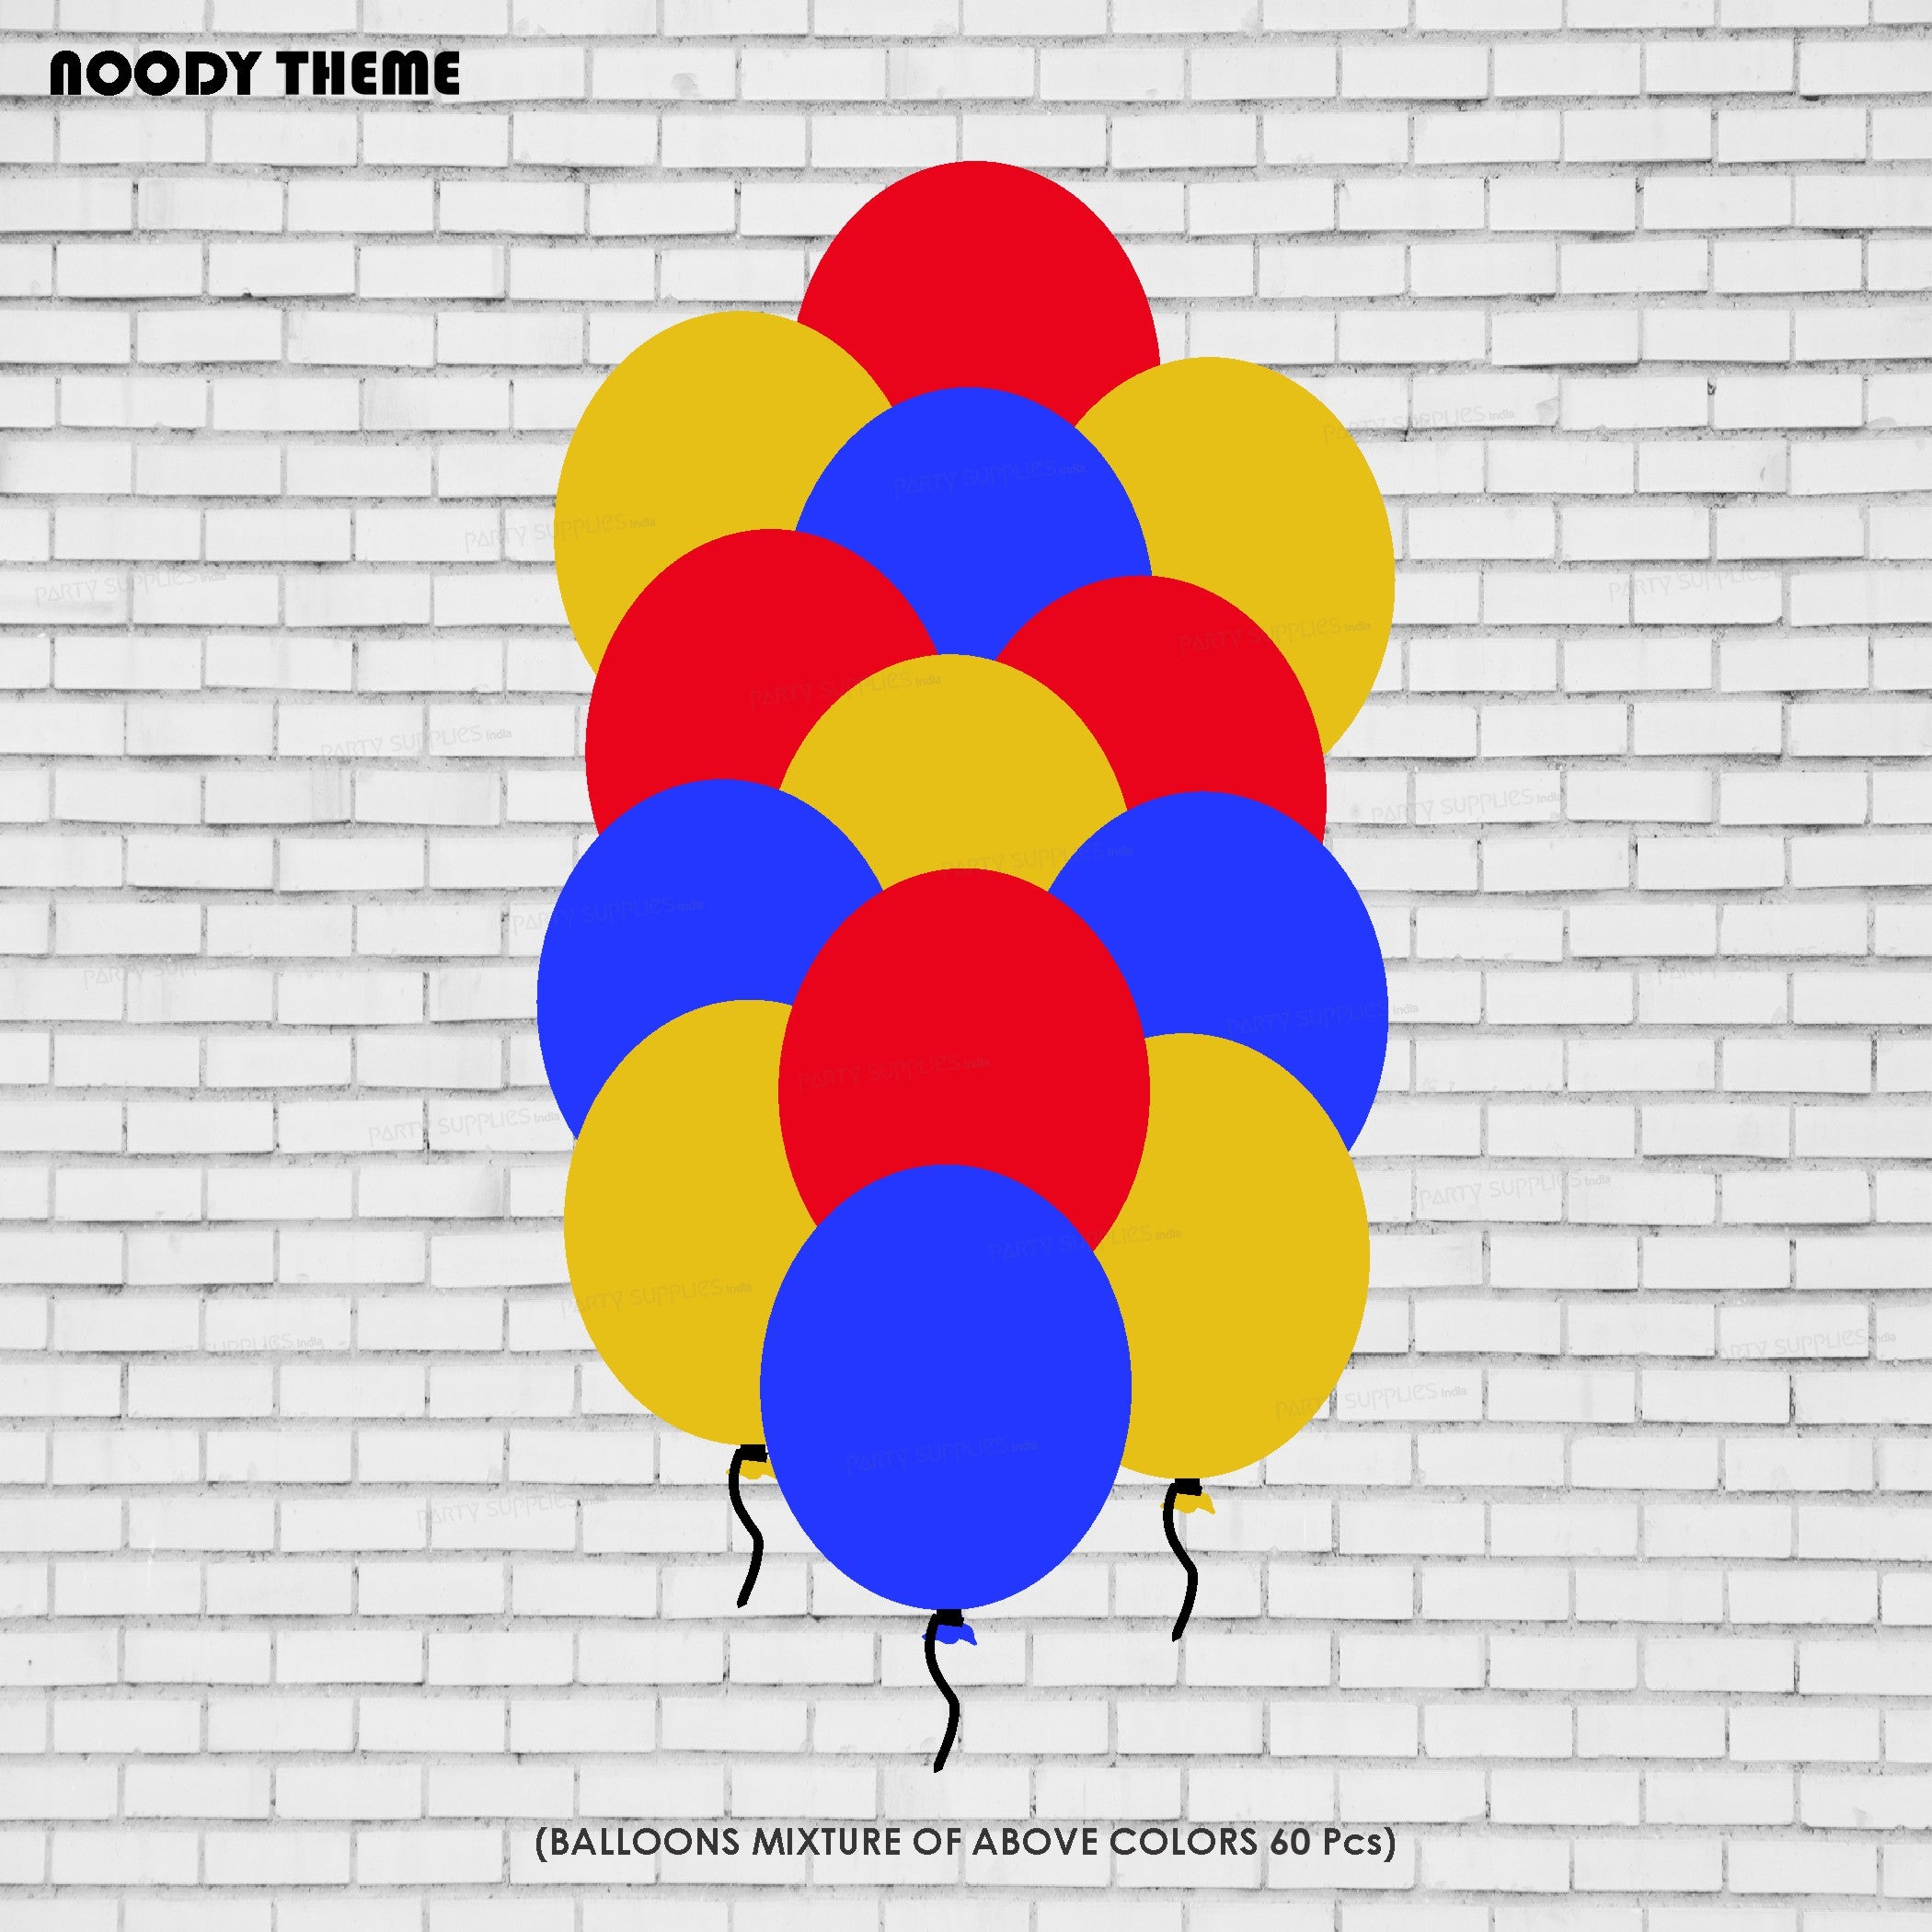 PSI Noddy Theme Colour 30Pcs Balloons